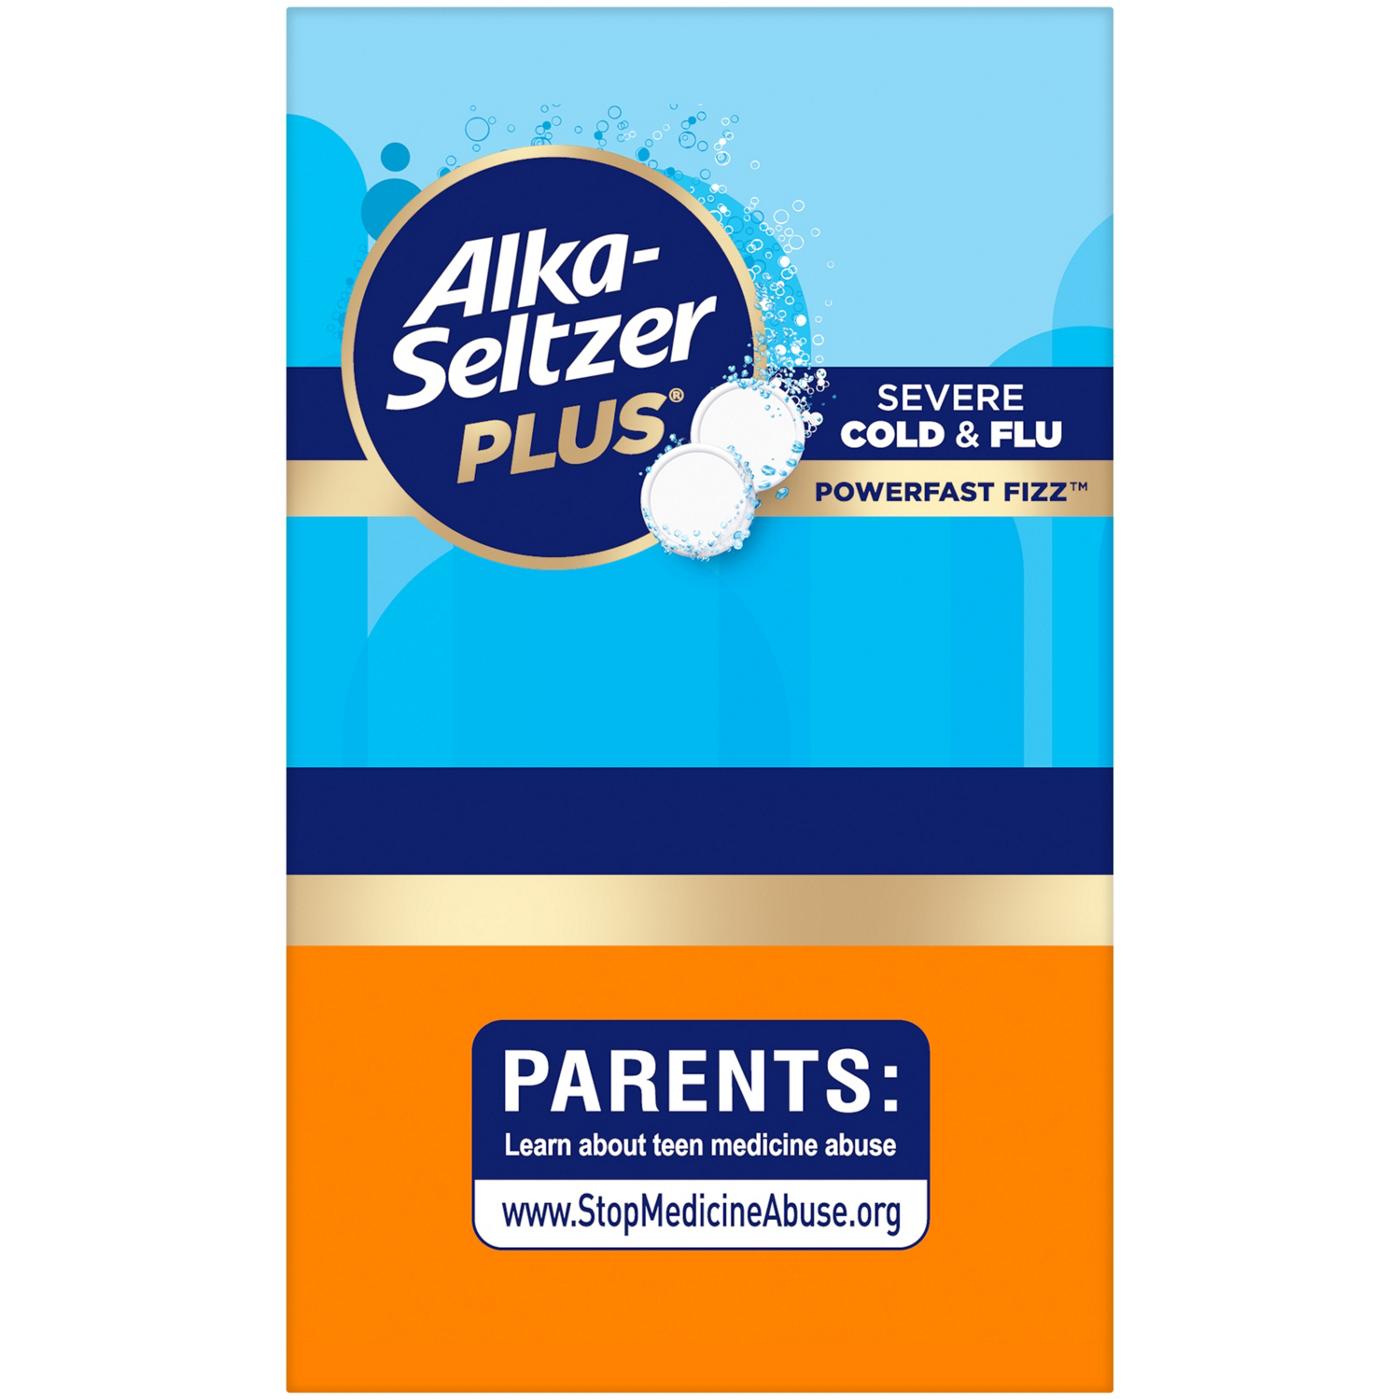 Alka-Seltzer Plus Severe Cold & Flu Powerfast Fizz Tablets - Citrus; image 5 of 6